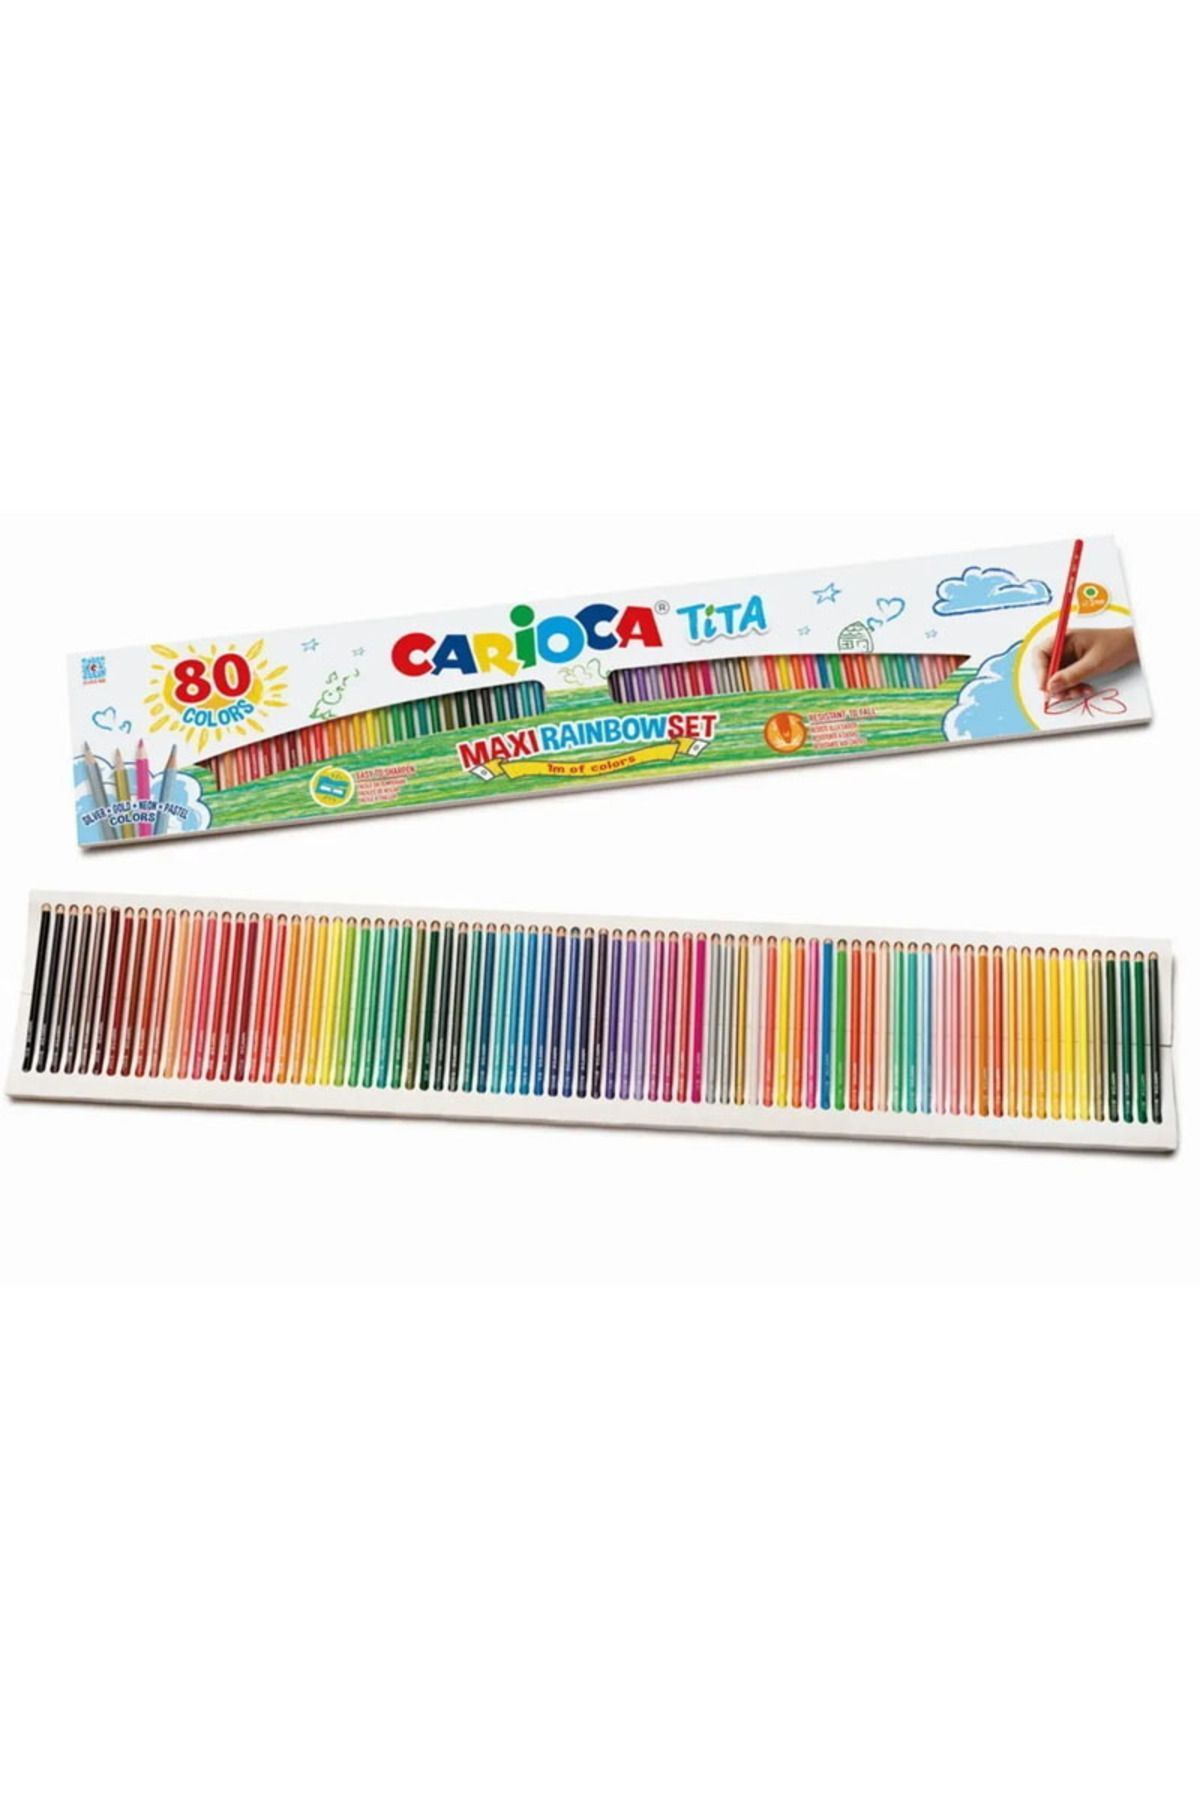 Carioca Tıta 80 Renk Kuru Boya Gökkuşağı Set 42890